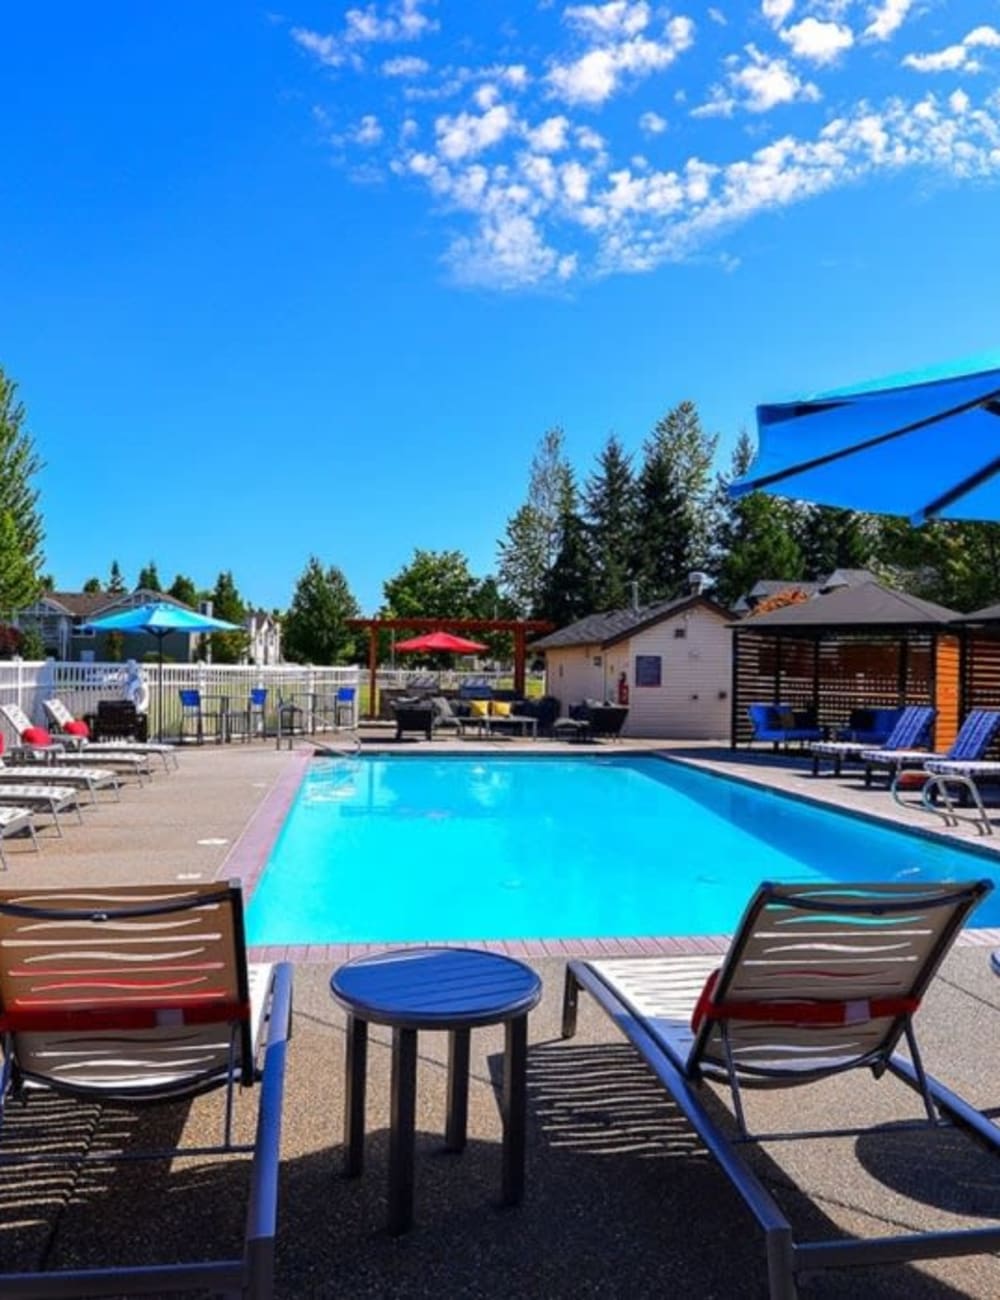 Our beautiful swimming pool at Clock Tower Village in DuPont, Washington